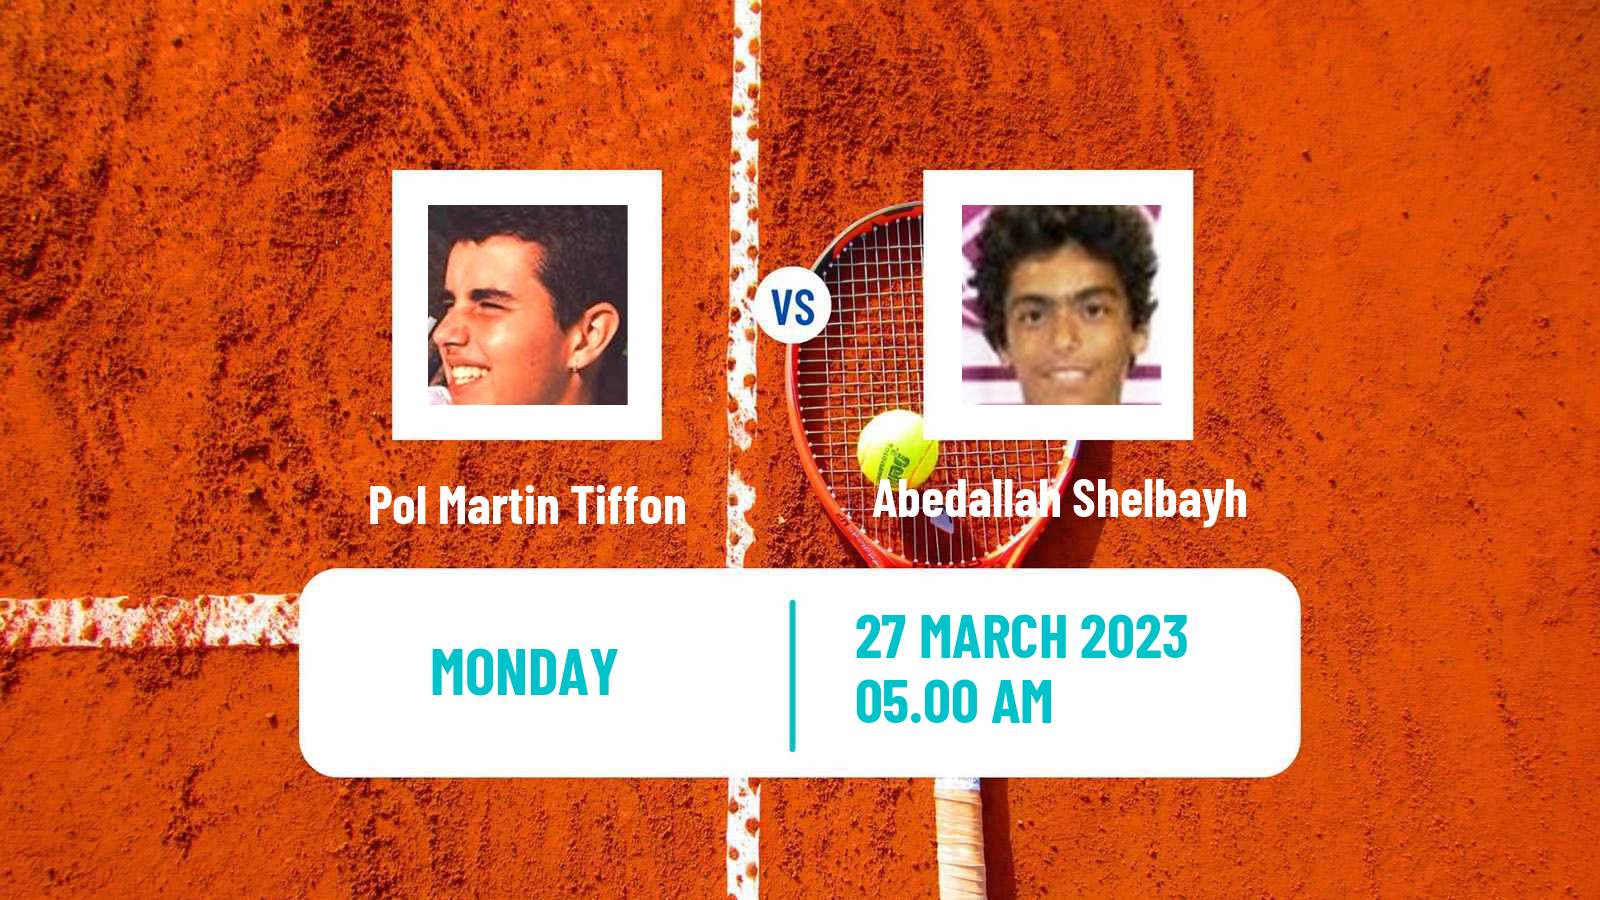 Tennis ATP Challenger Pol Martin Tiffon - Abedallah Shelbayh